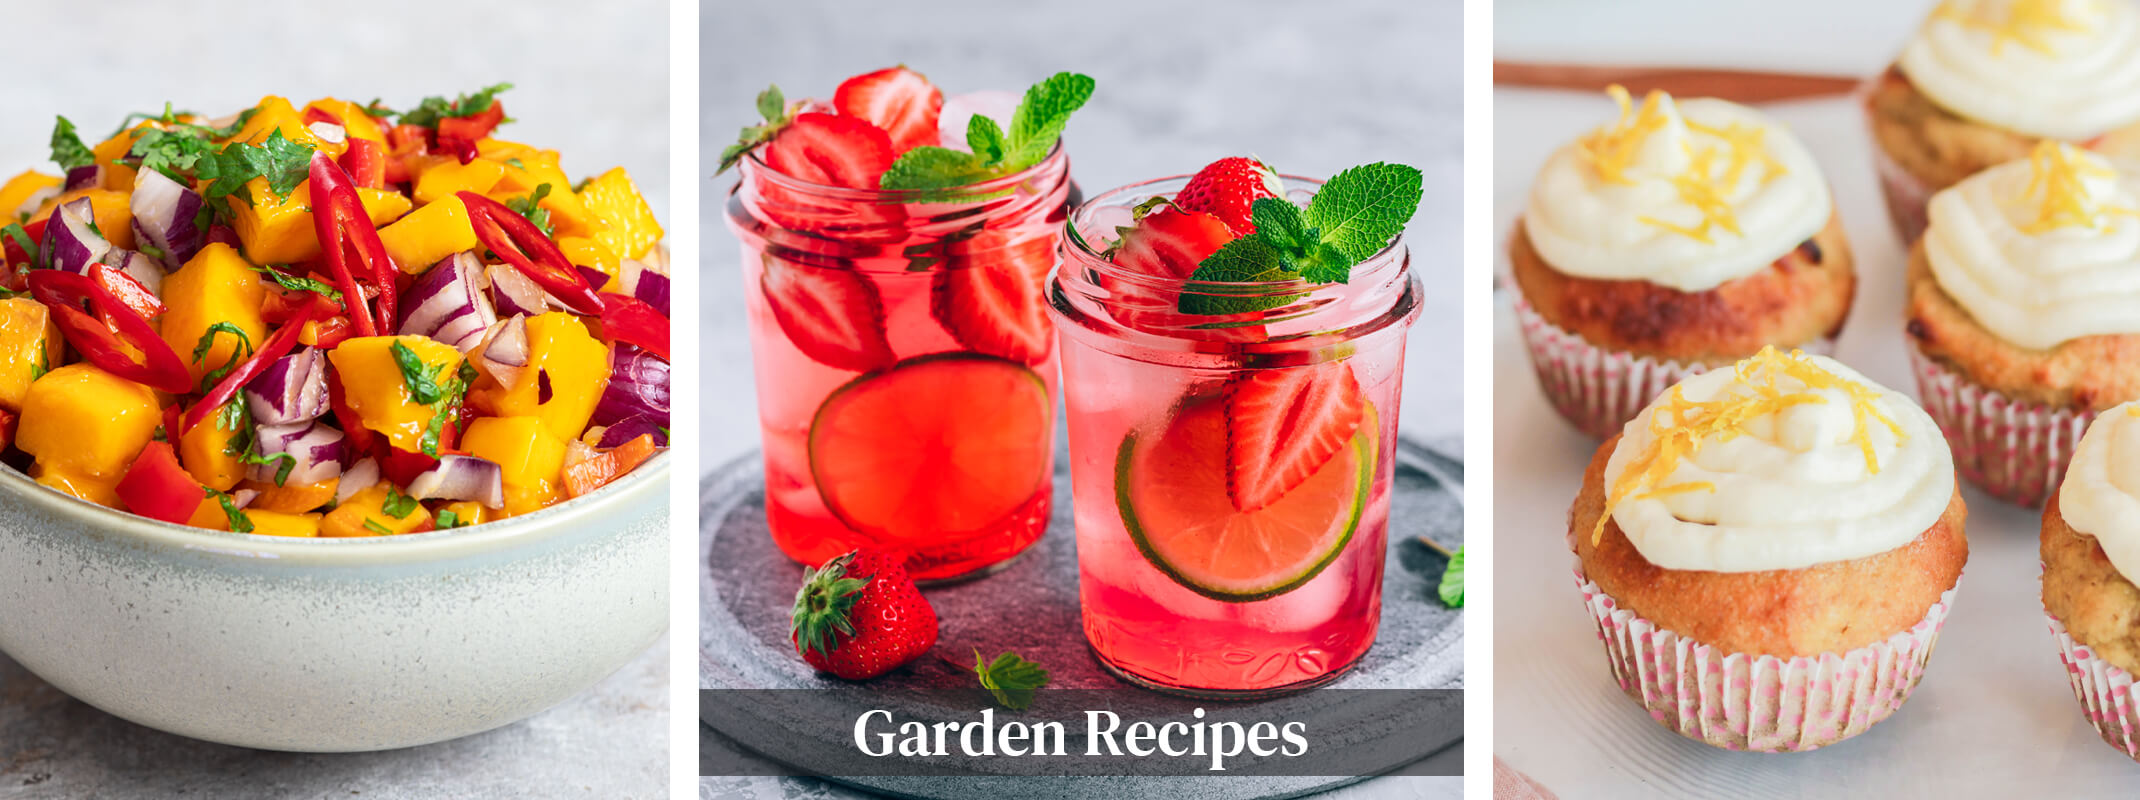 garden recipe images of mango salad, strawberry lime margarita and lemon cupcakes